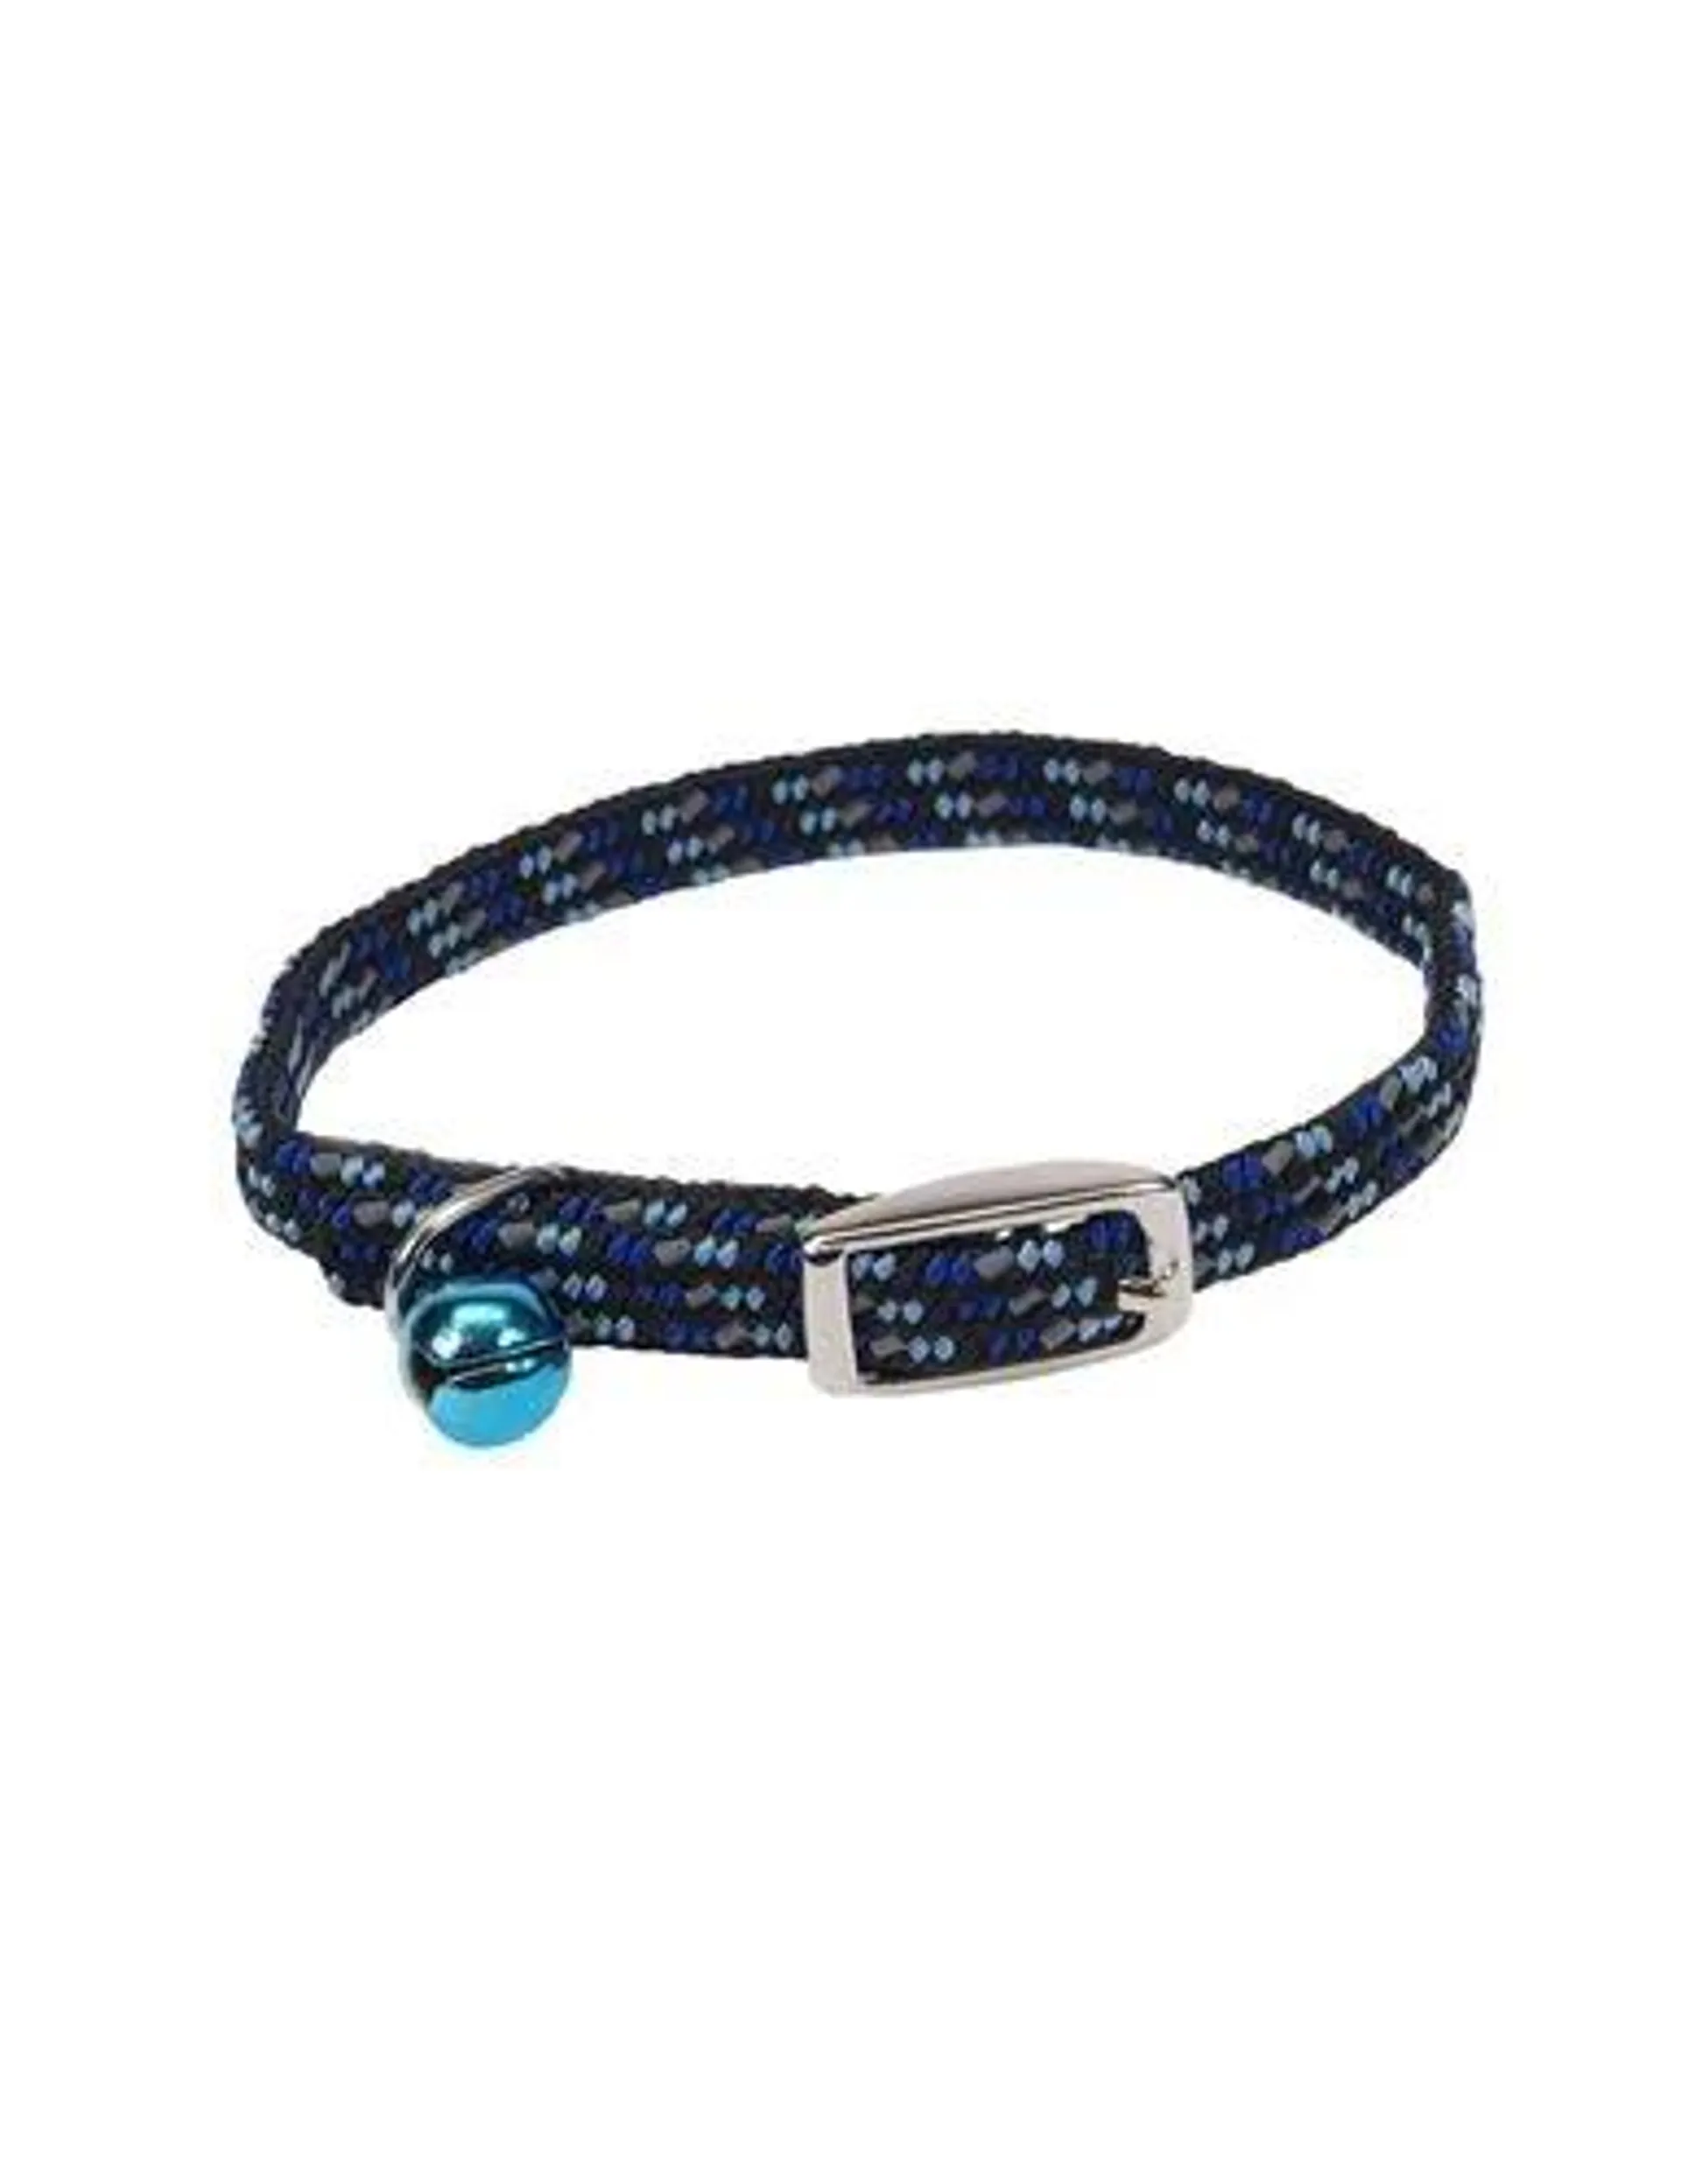 Li'l Pals® Elasticized Safety Kitten Collar with Reflective Threads, Blue, 3/8" x 08"